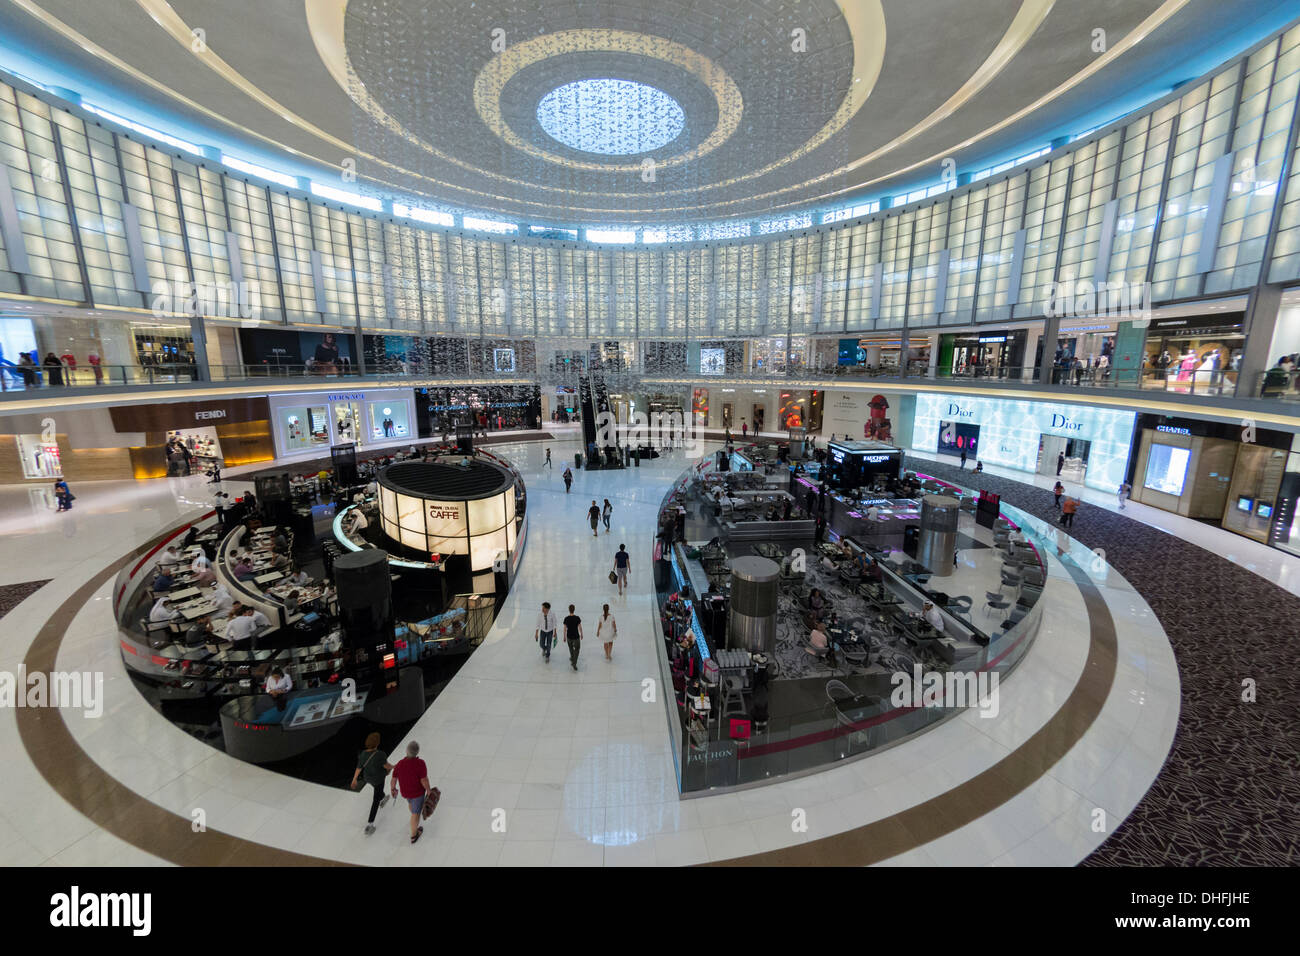 Interior of large atrium with cafes and shops at Dubai Mall in Dubai United Arab Emirates Stock Photo